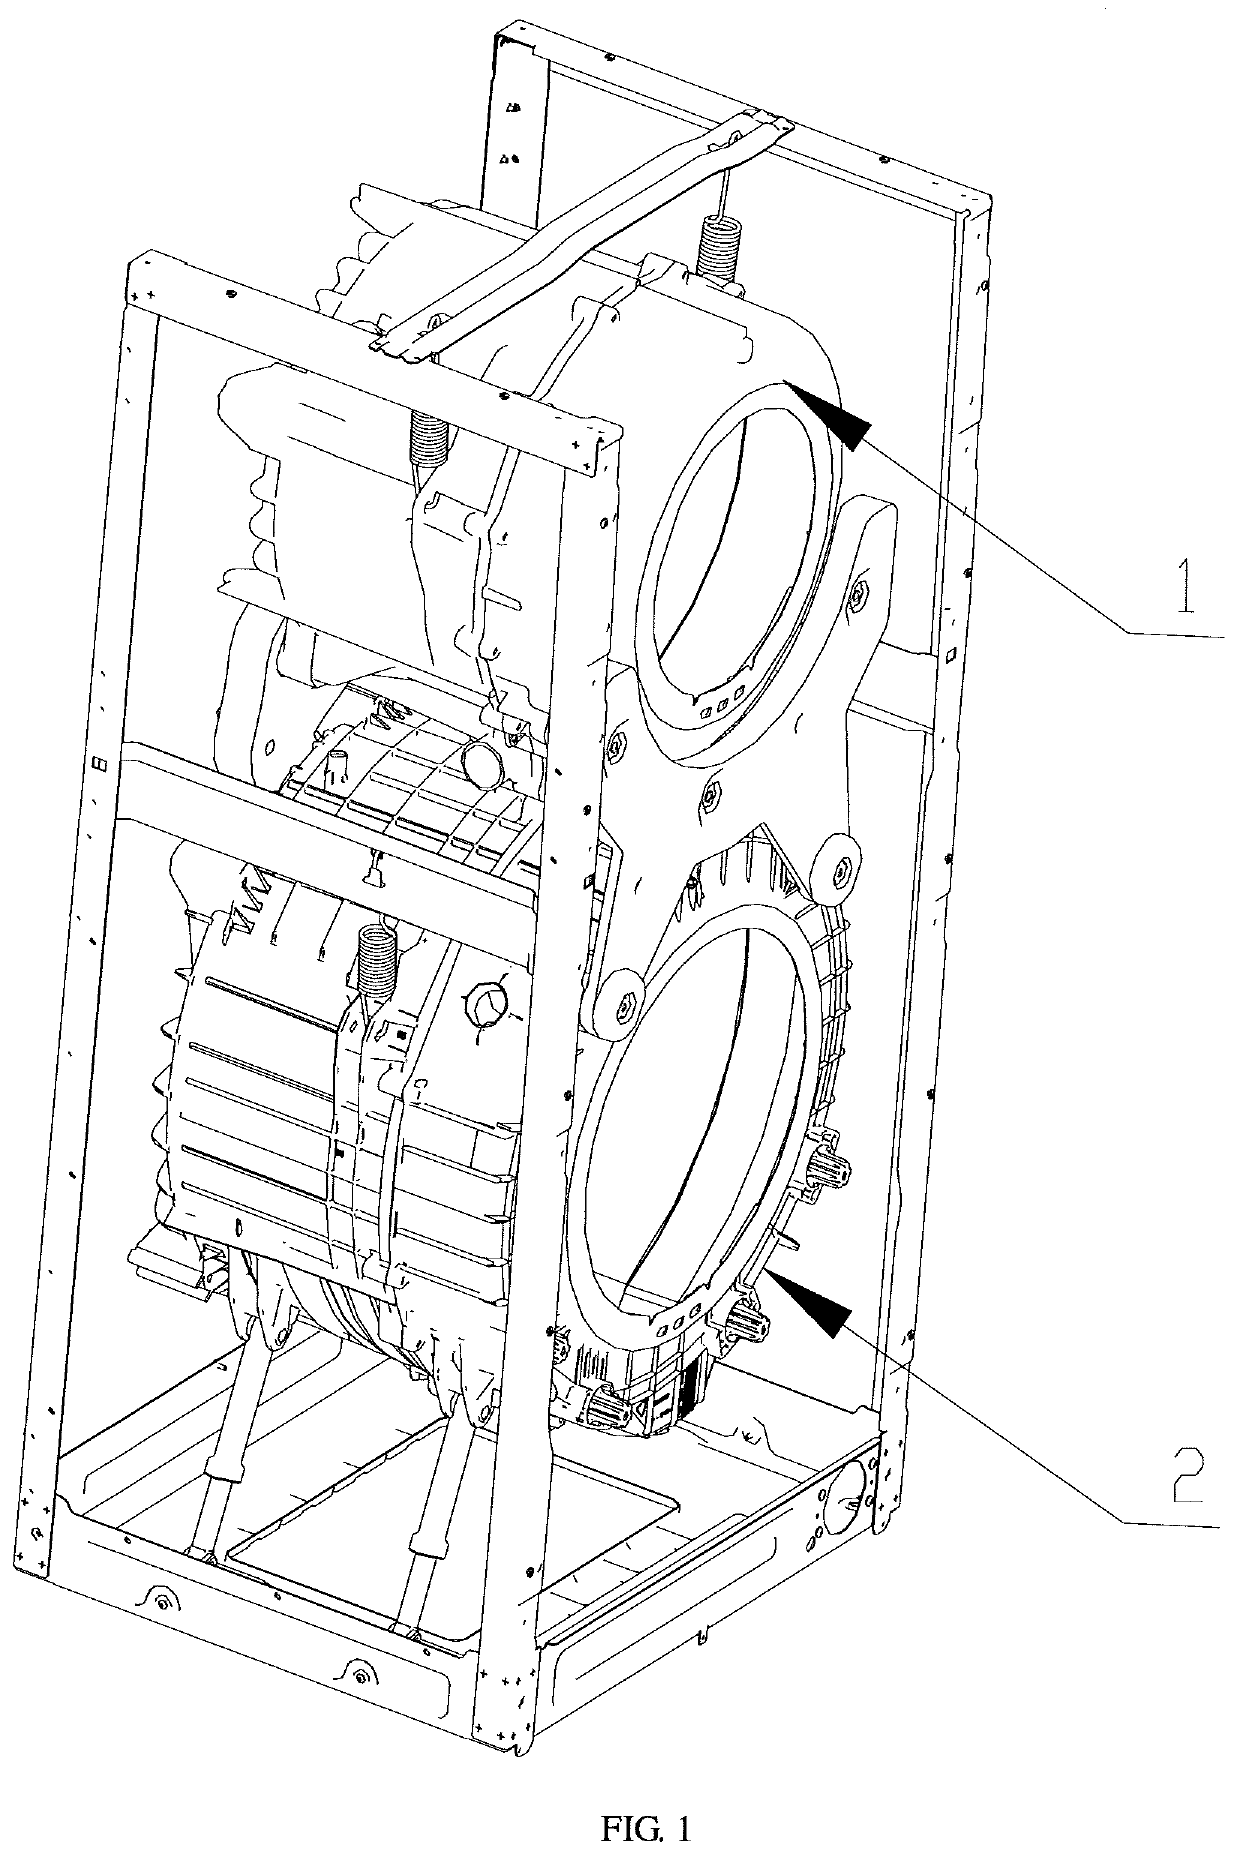 Heating control method of a multi-drum washing machine